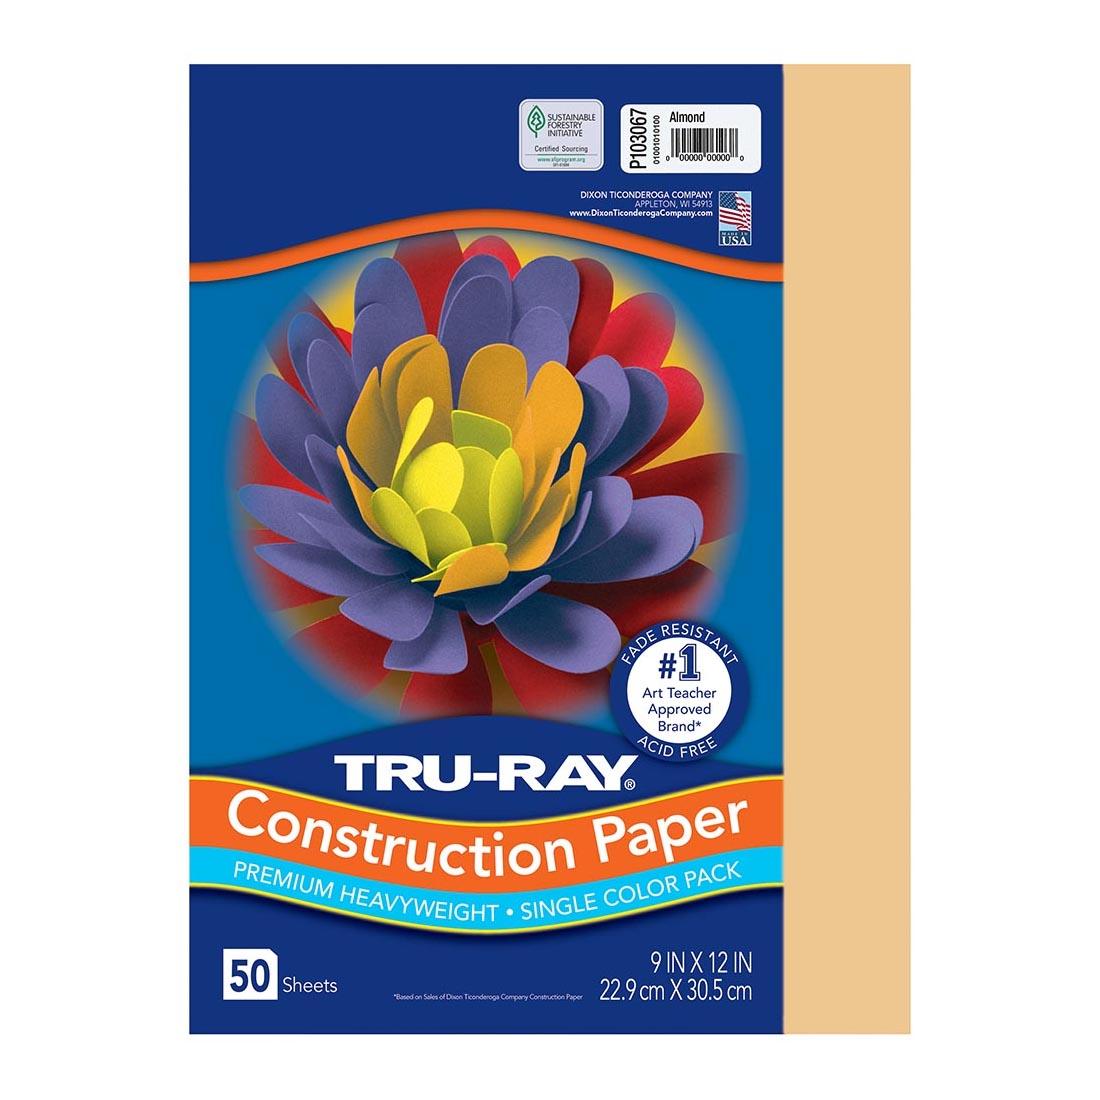 Almond Tru-Ray Construction Paper